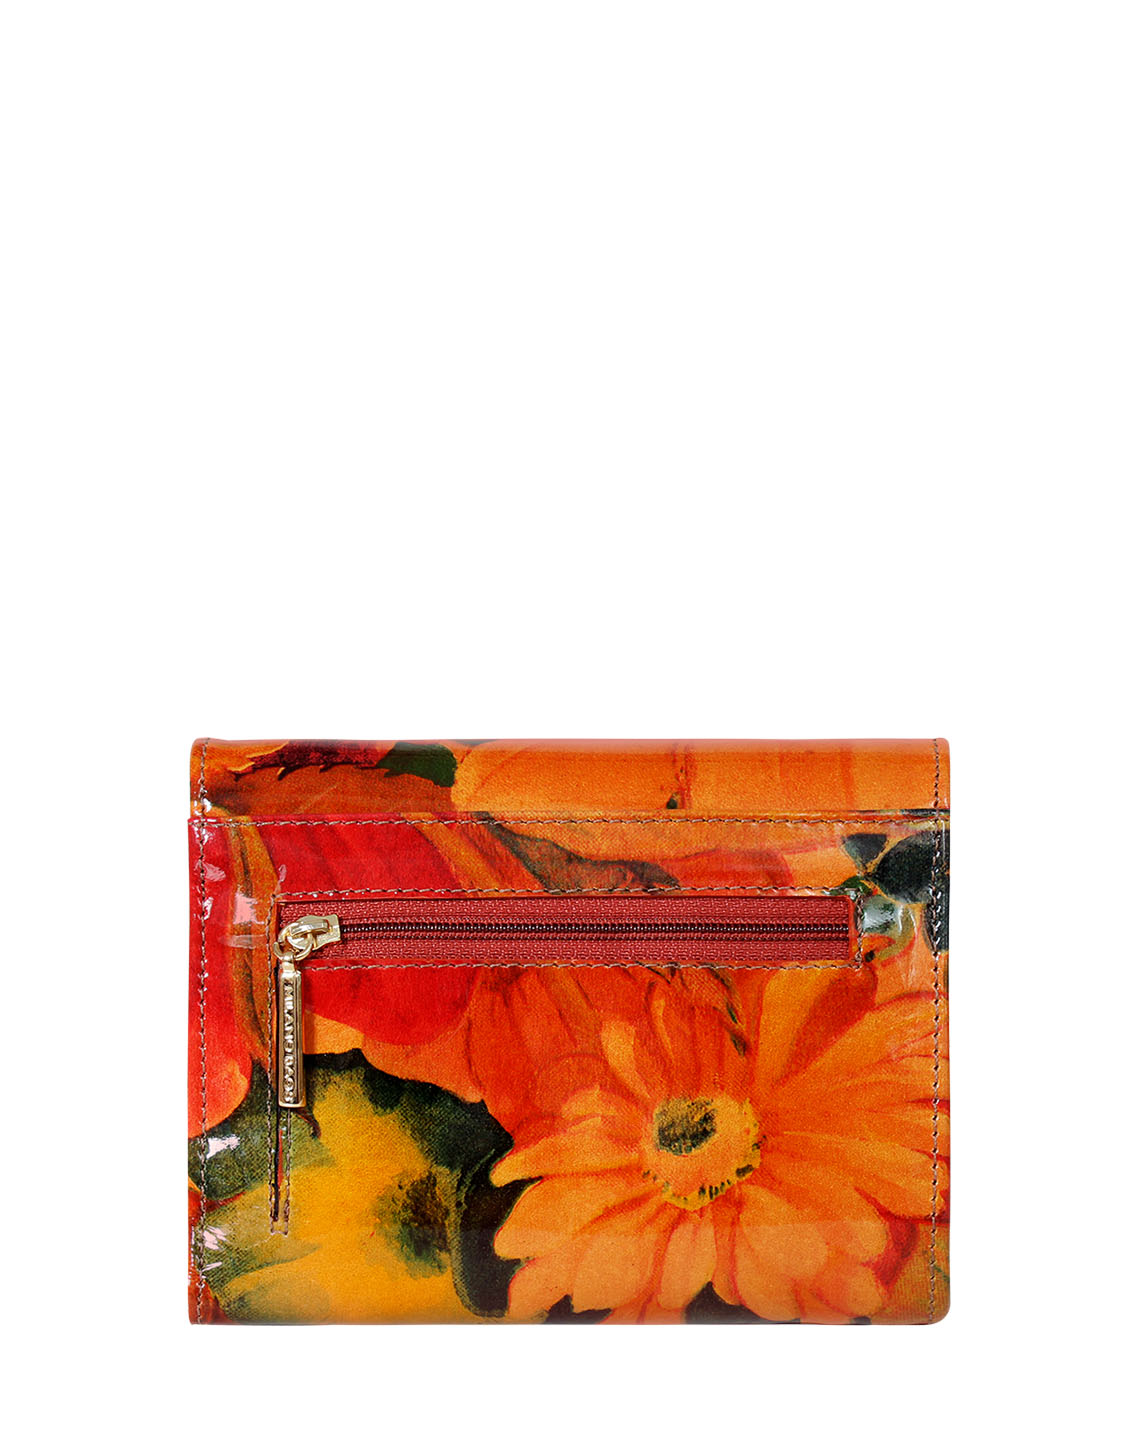 Billetera de Mujer BM-501 Color Naranja